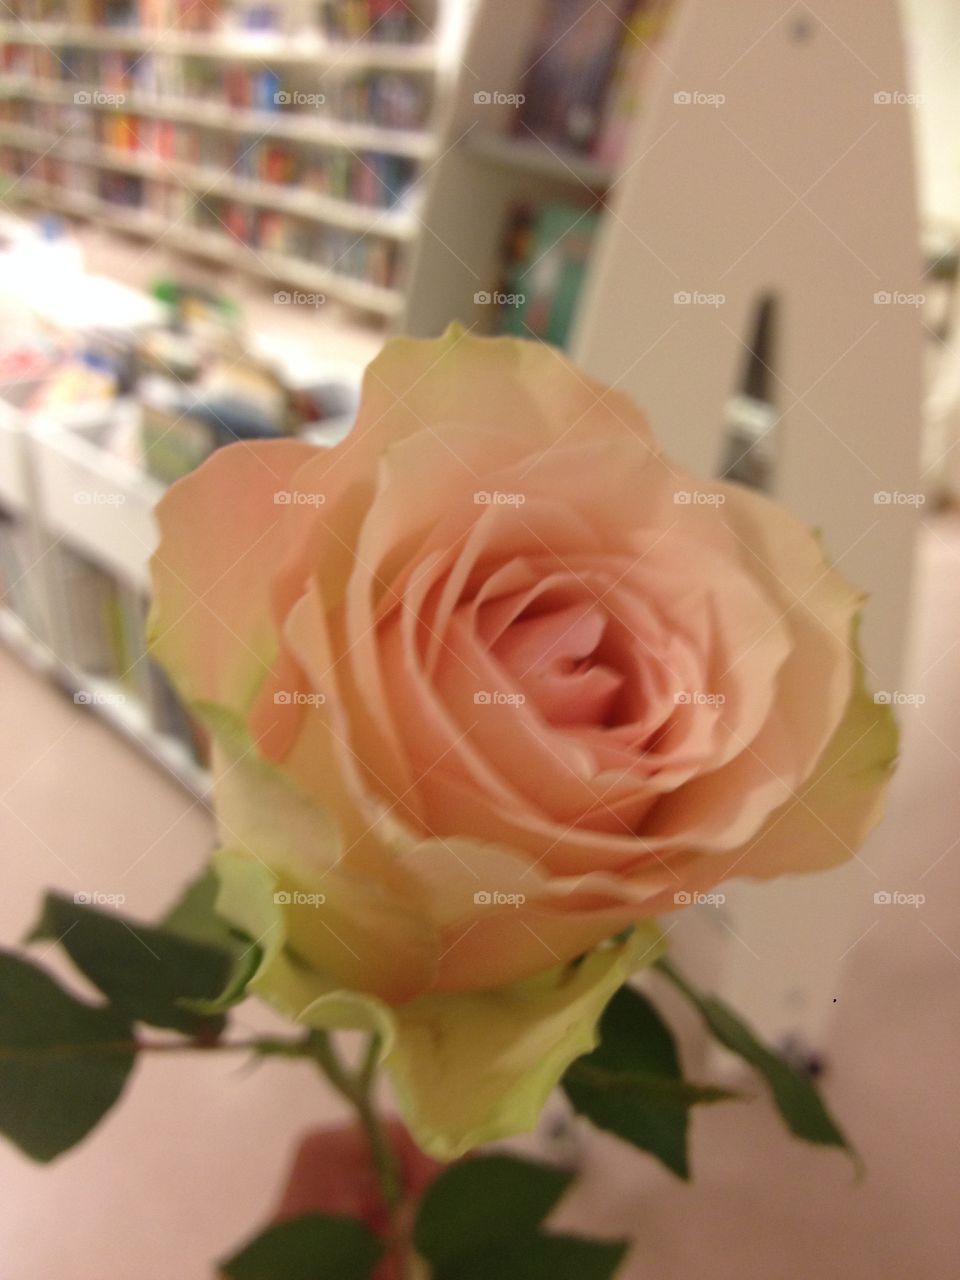 Pink Rose. I got this rose for "good work"